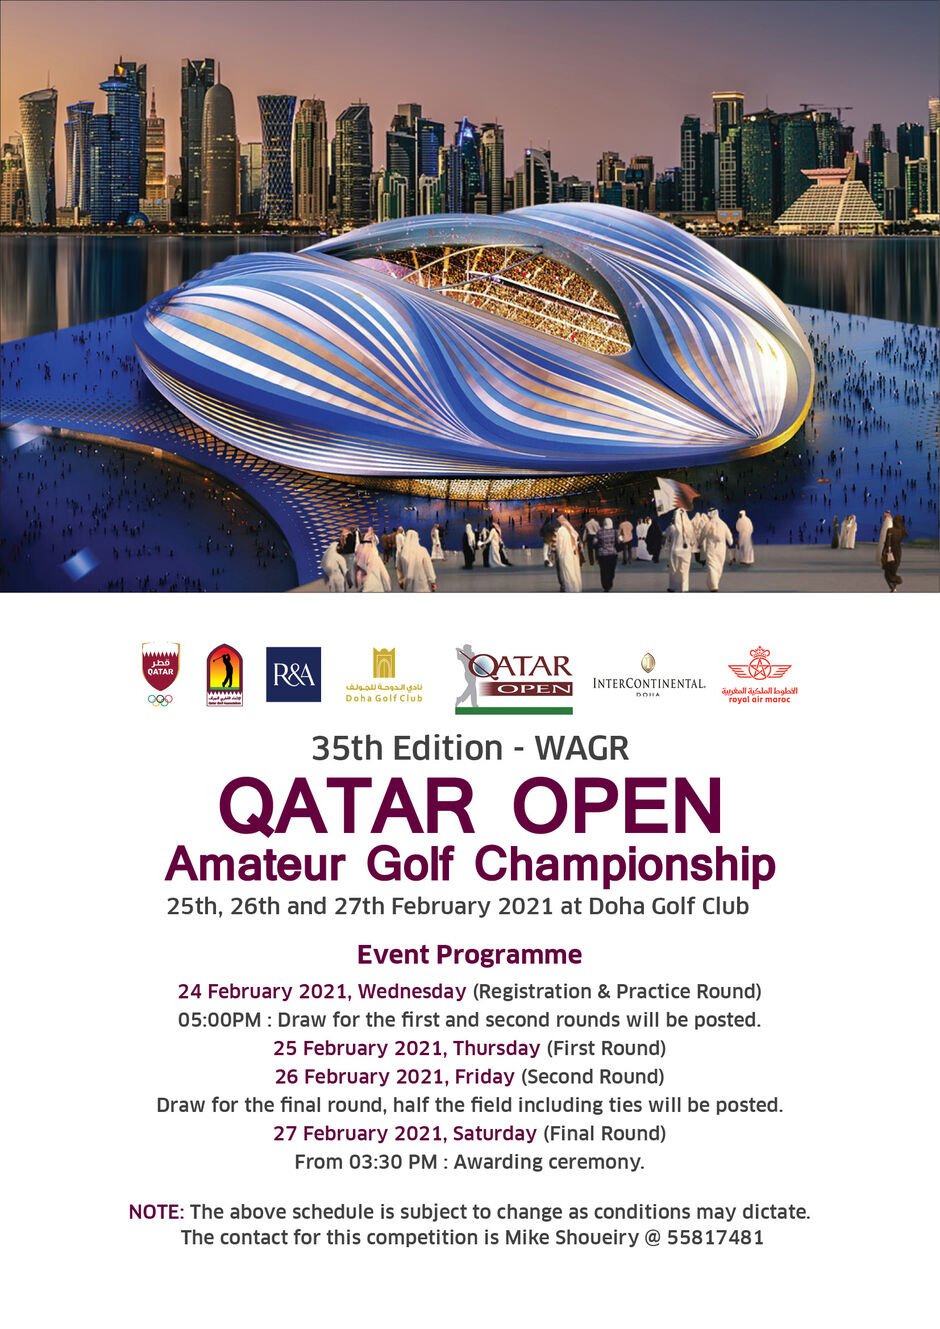 The Qatar Open Doha Golf Club